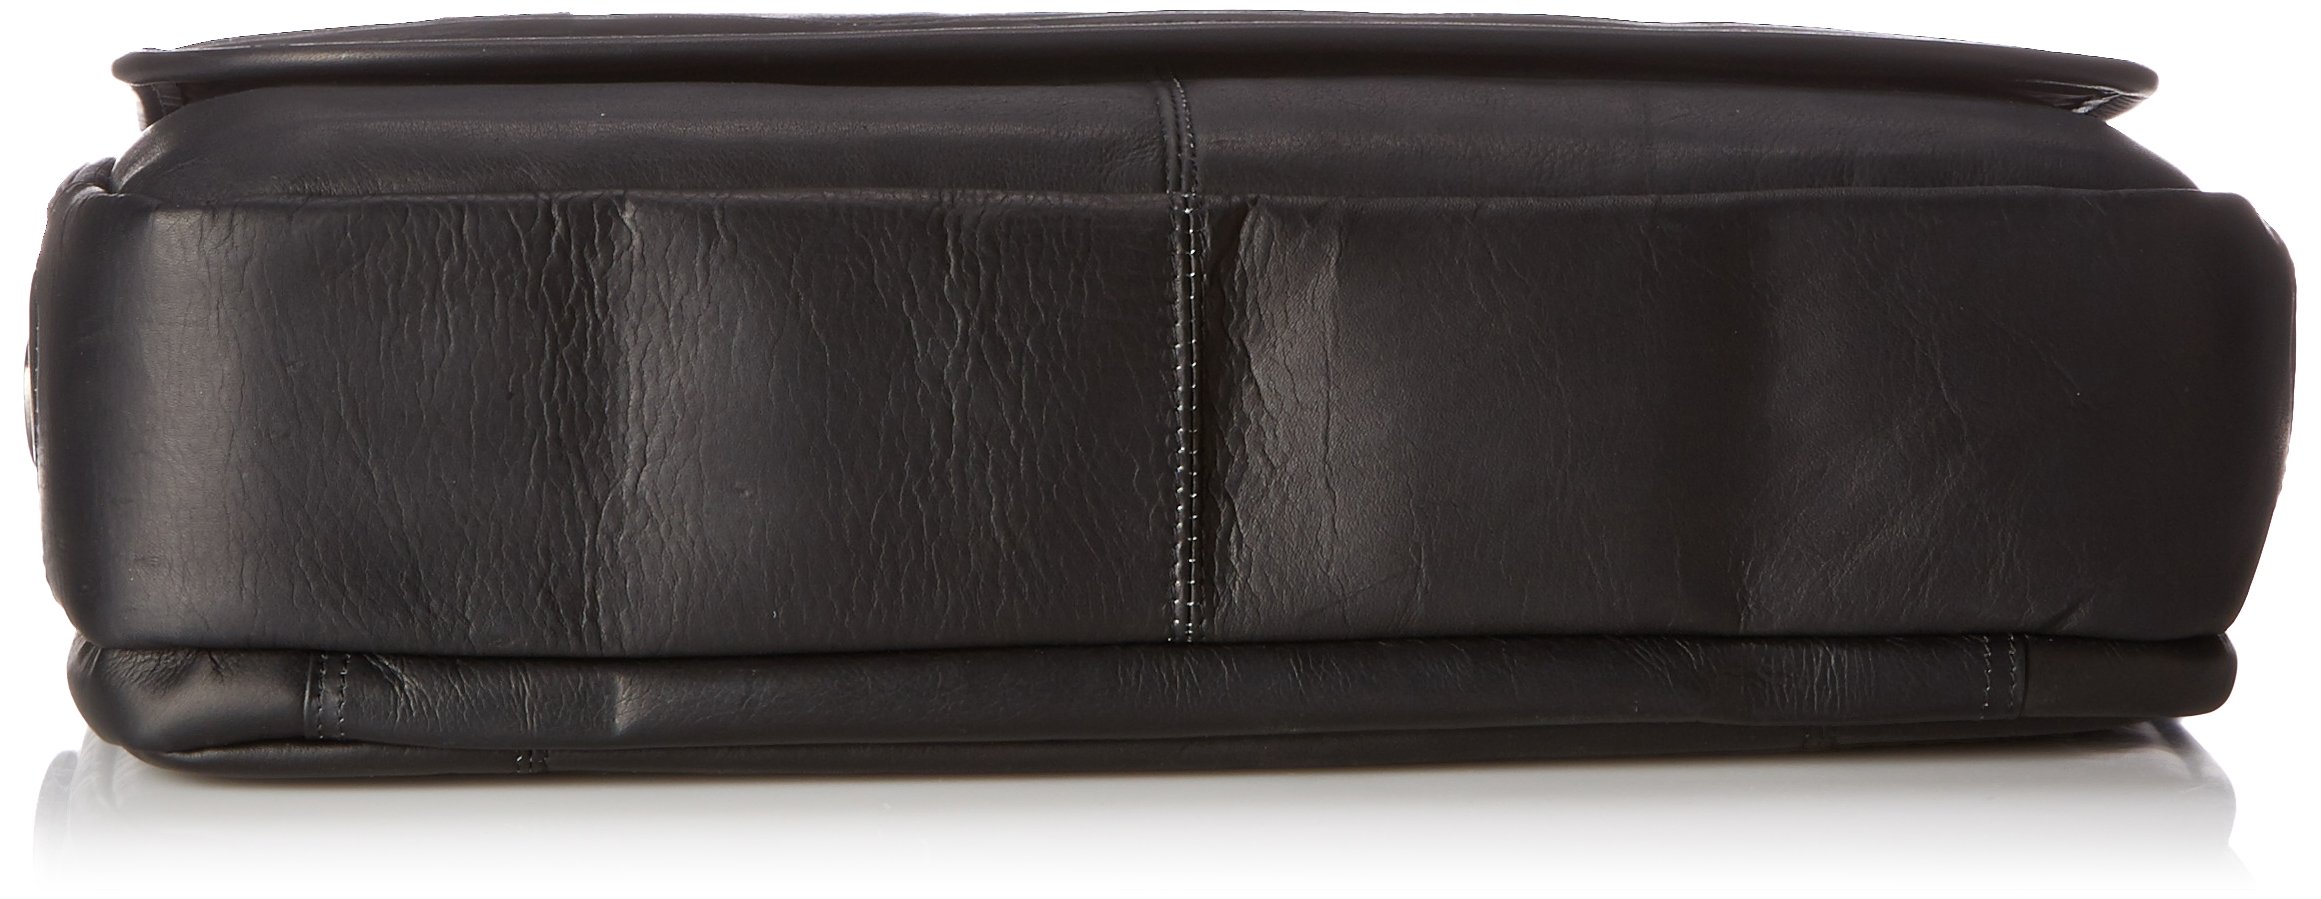 Samsonite Columbian Leather Briefcase, Black, Flapover